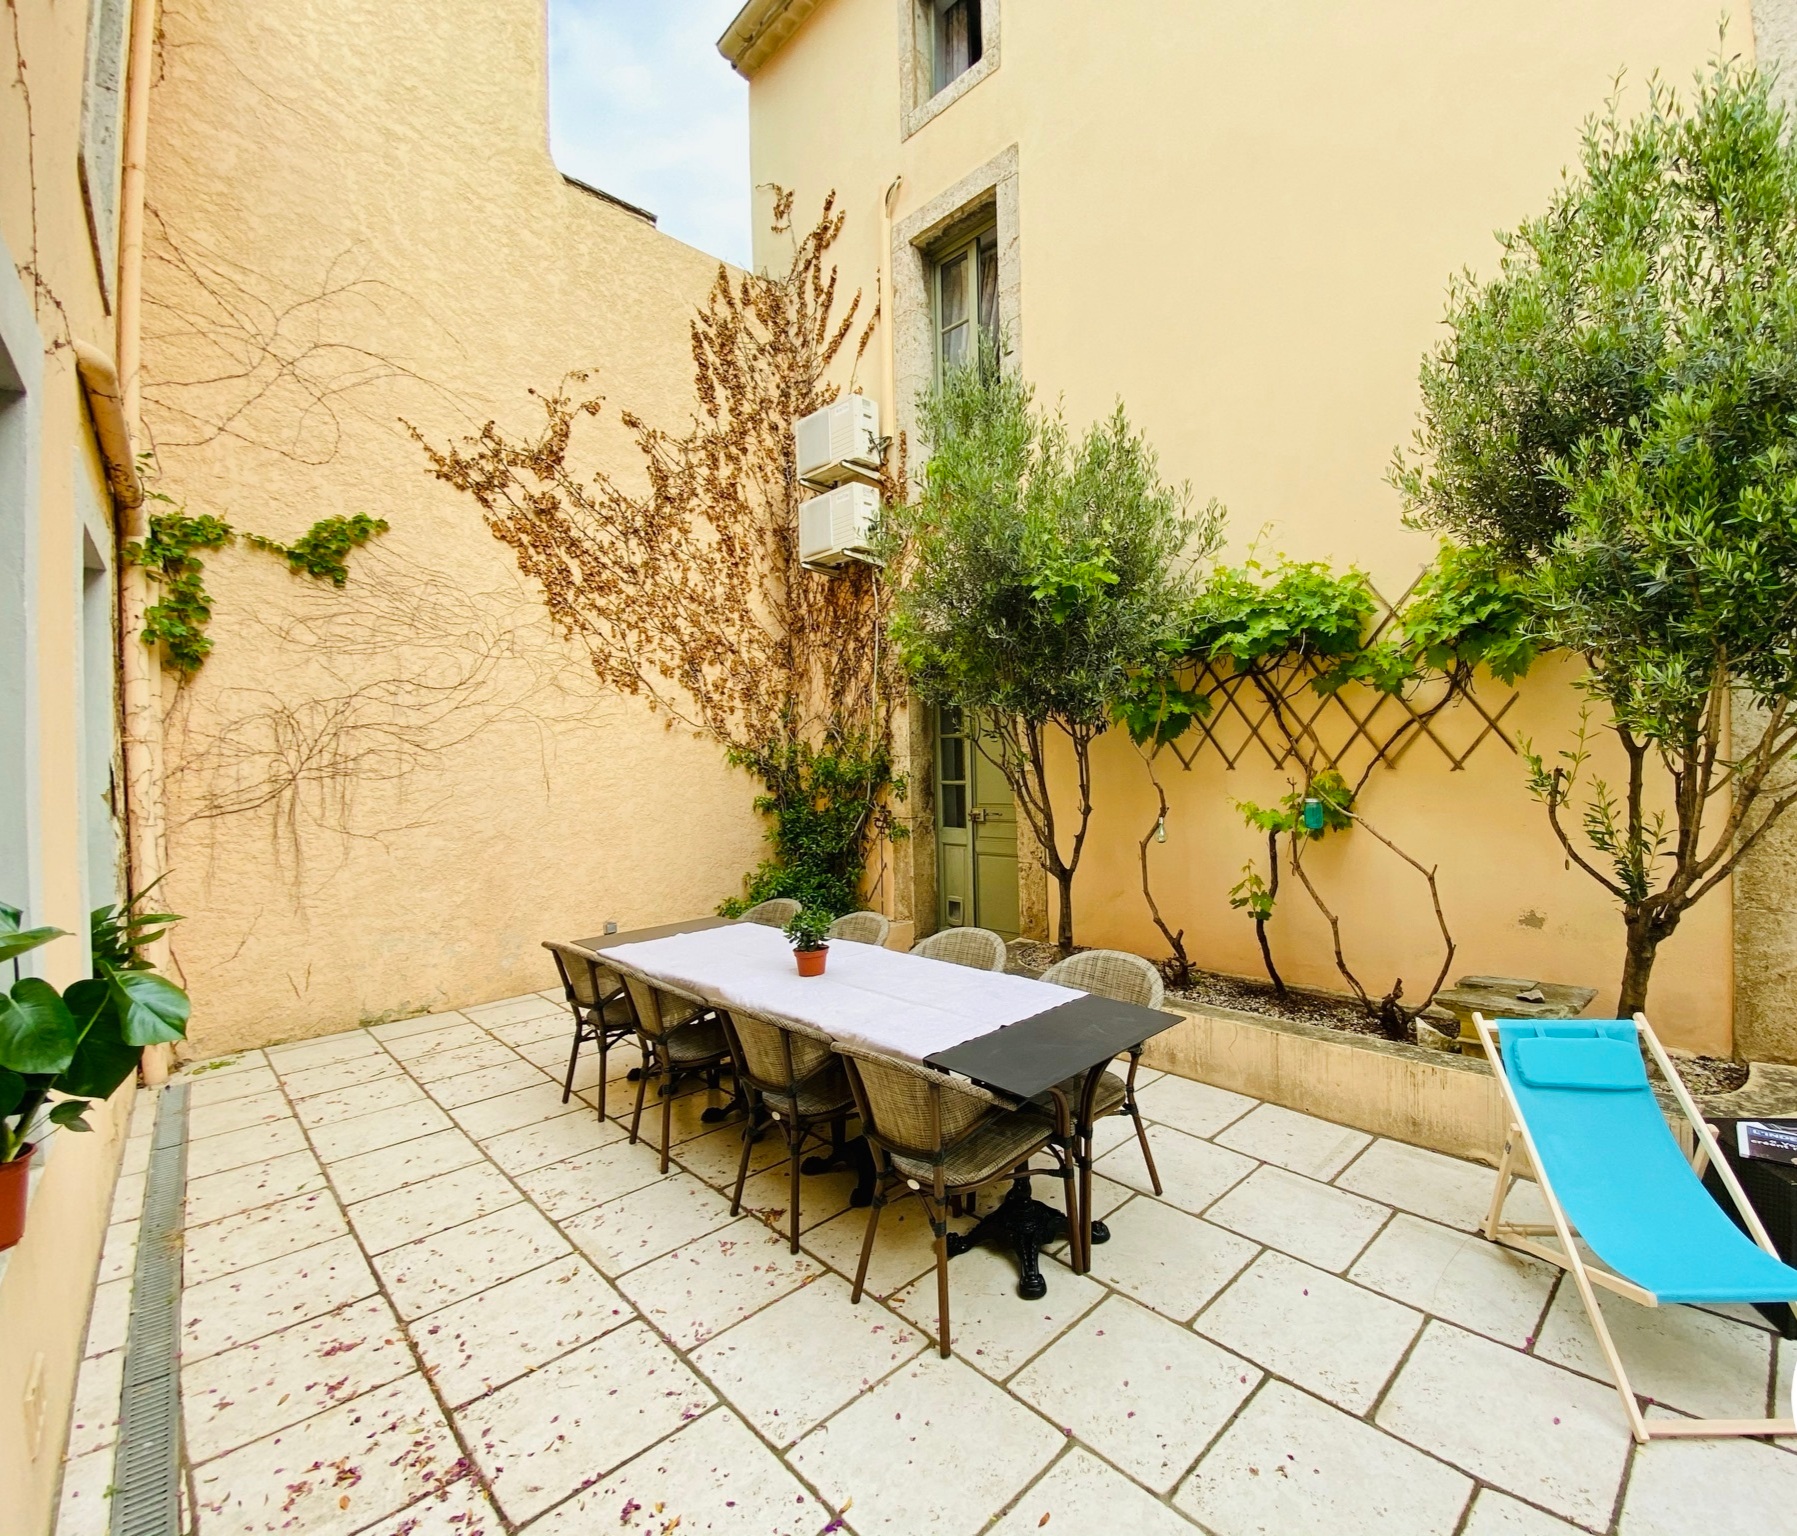 Qlistings - Elegant Maison De Maitre Offering Private Quarters, Separate Part Run As Bnb And Courtyard. Property Image